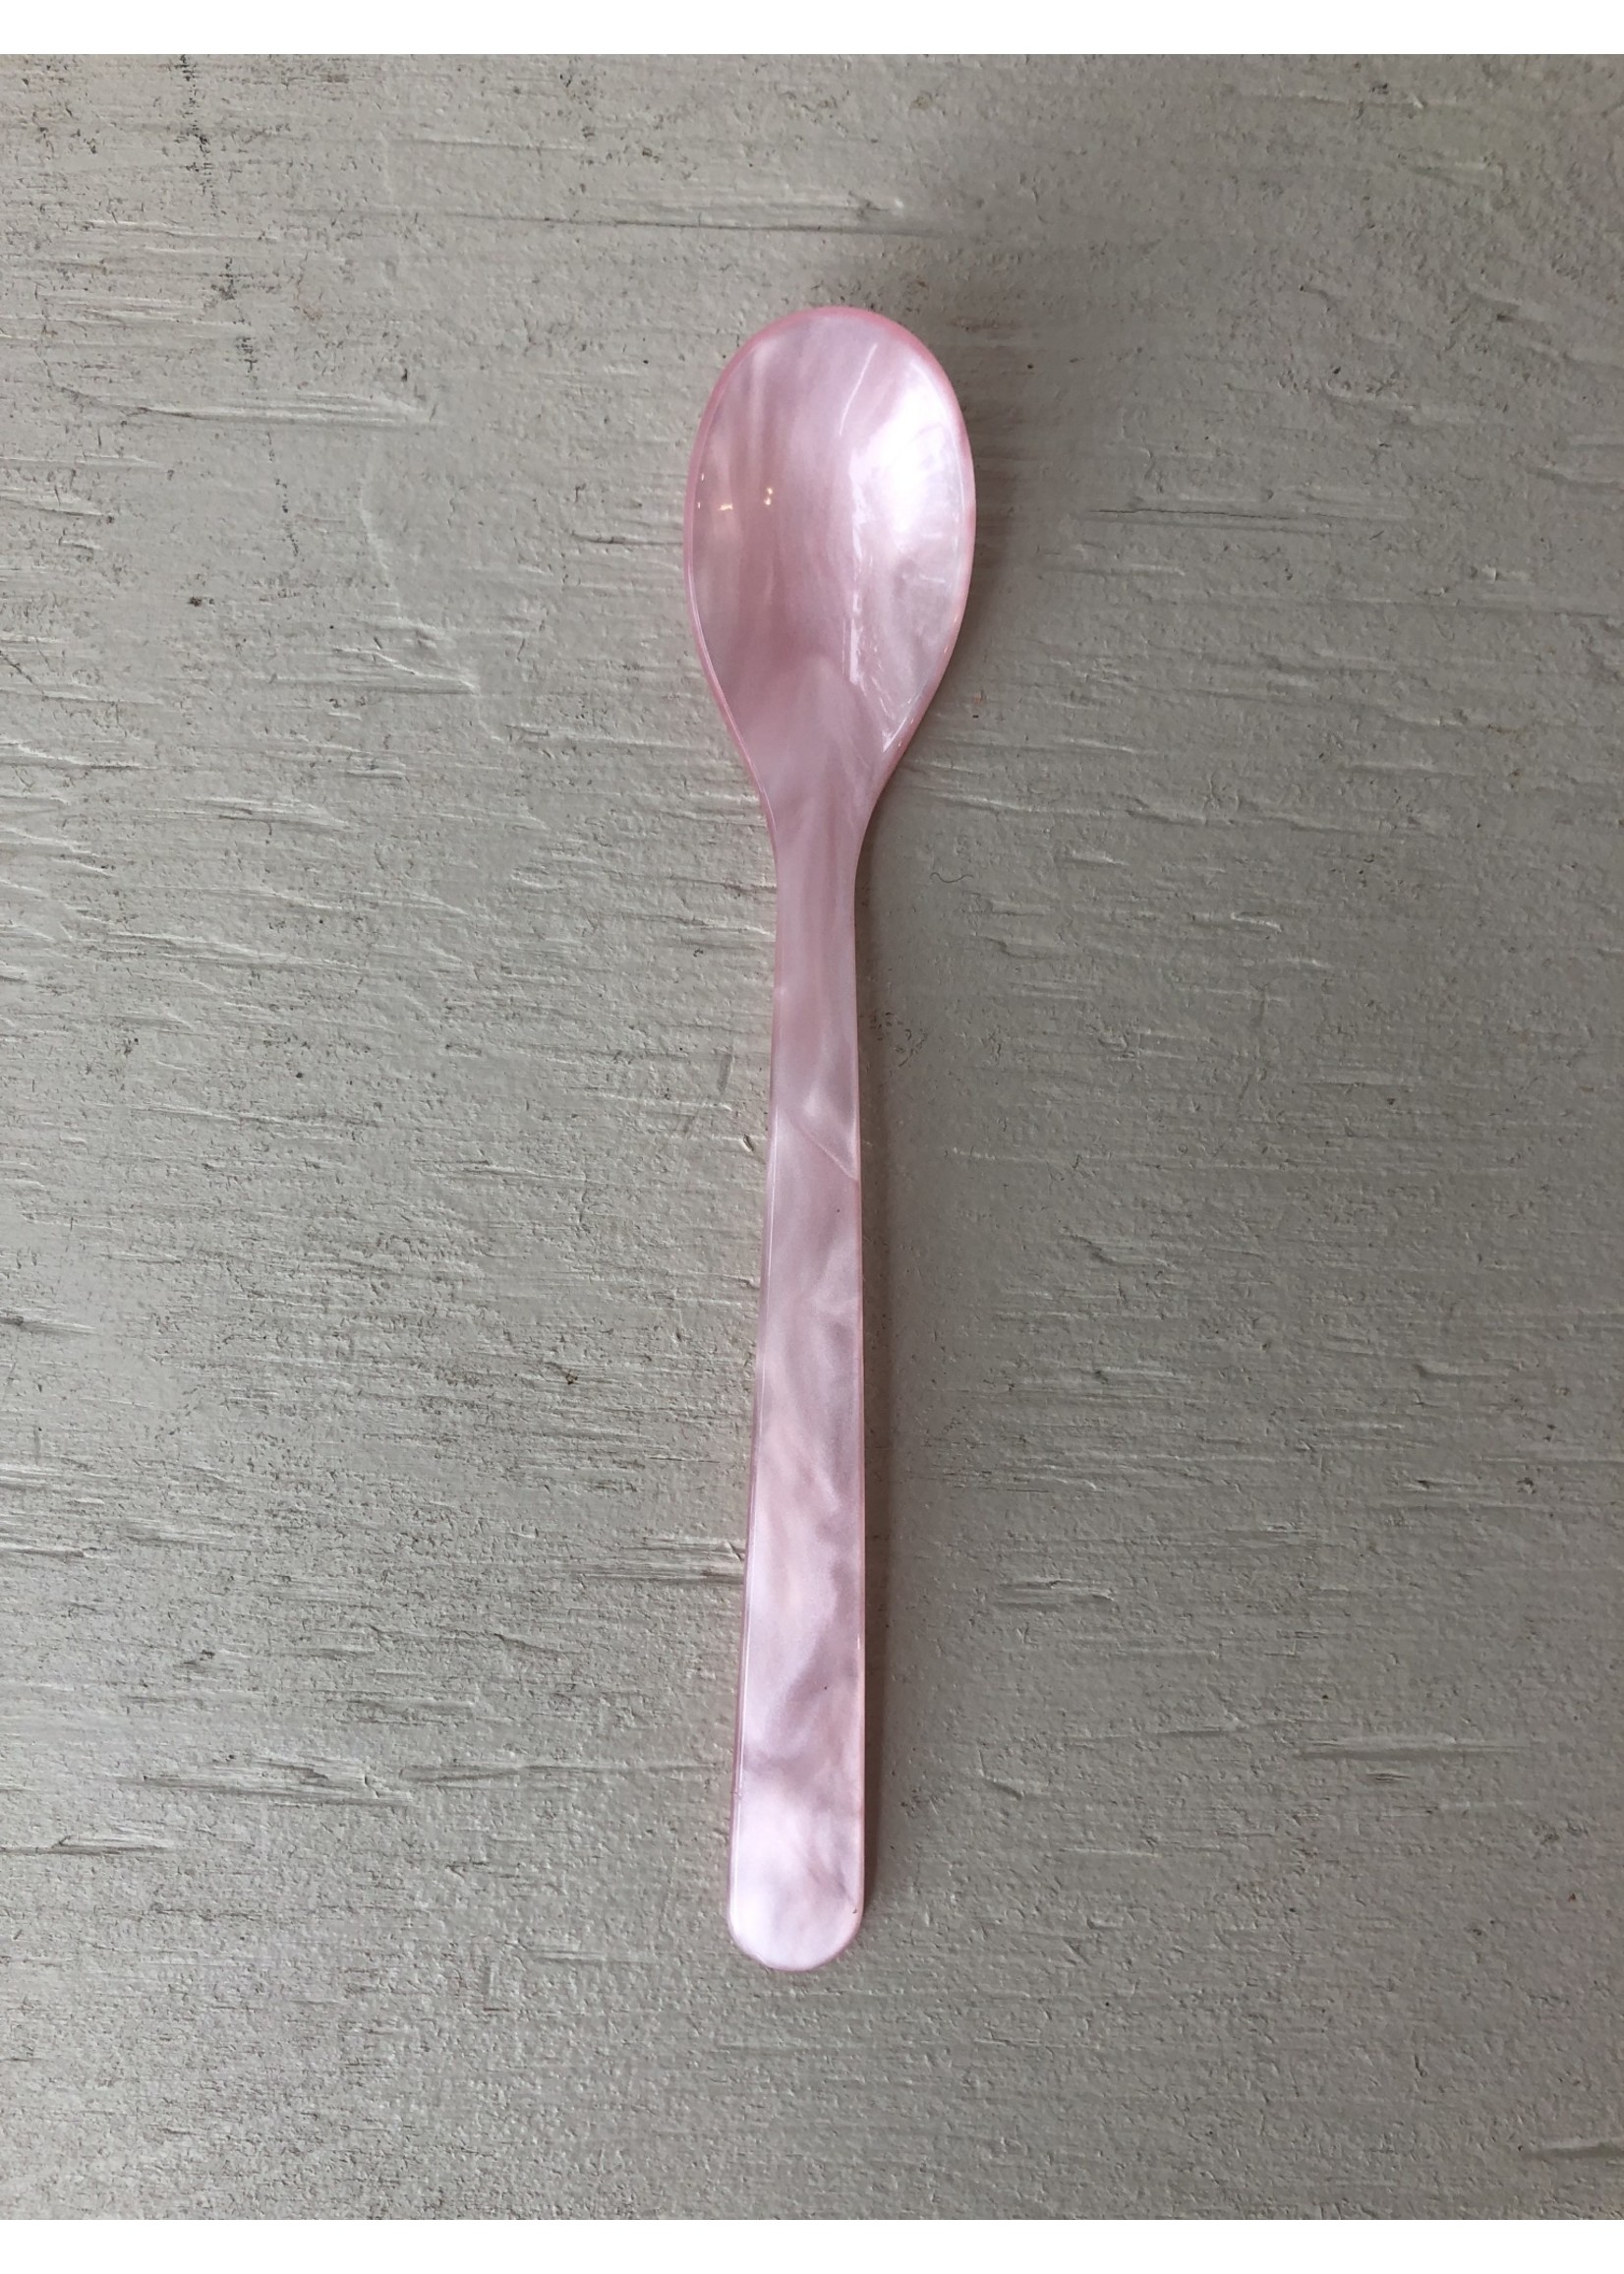 Heim Sohne Table Spoons by Heim Söhne